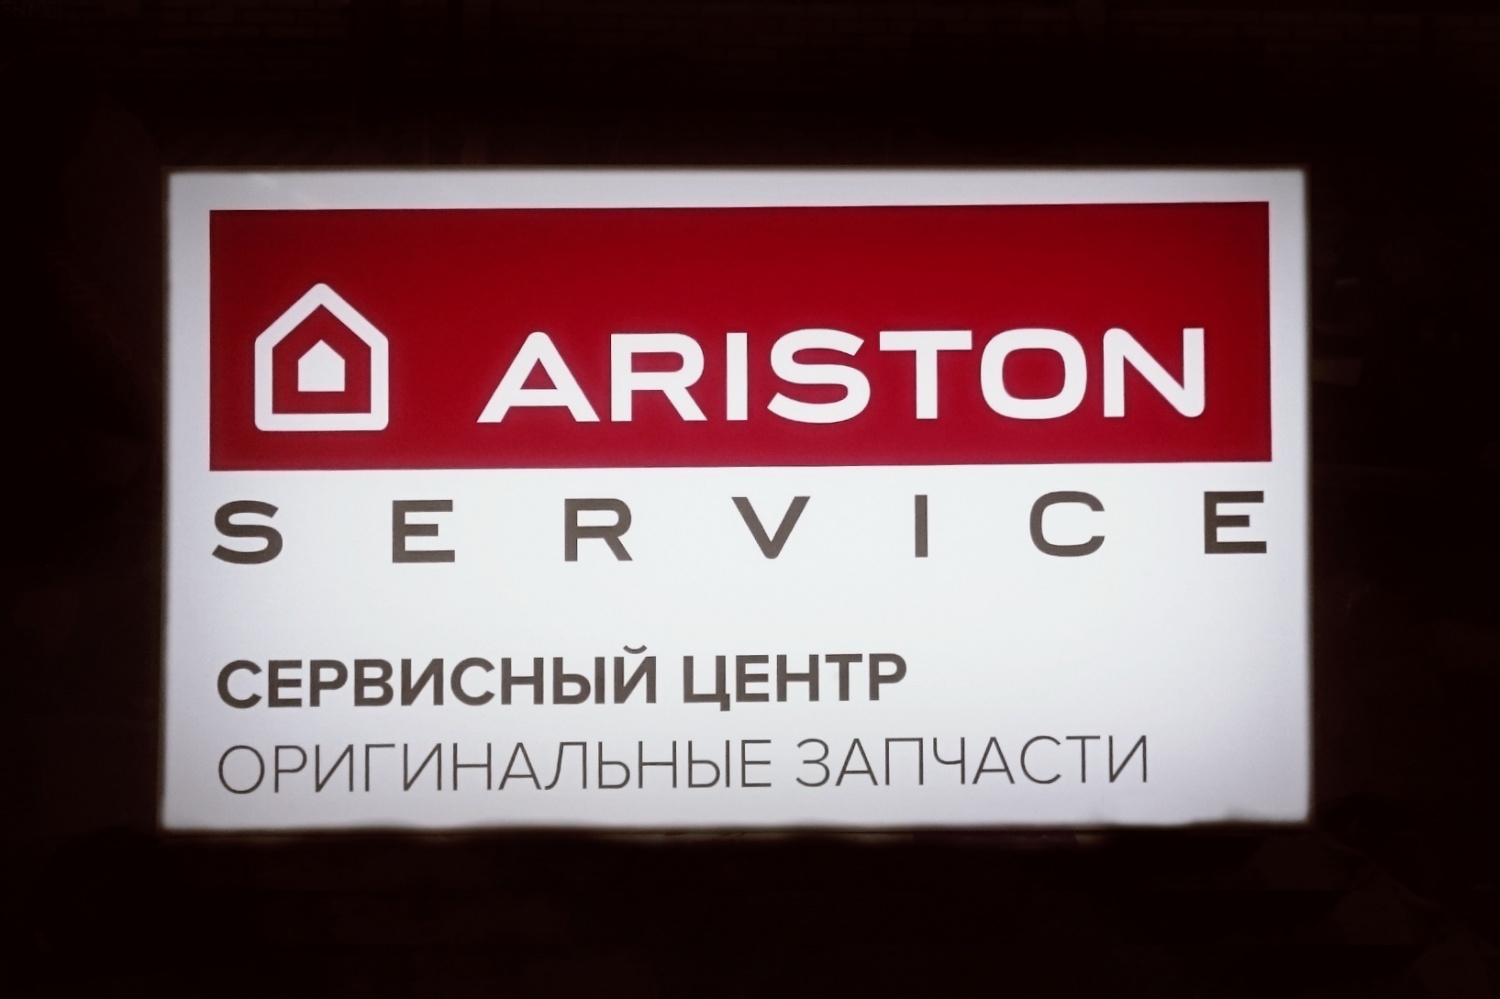 Ariston спб. Сервисный центр Ariston. Фирменный магазин Аристон. Запасные части Аристон. Аристон логотип.